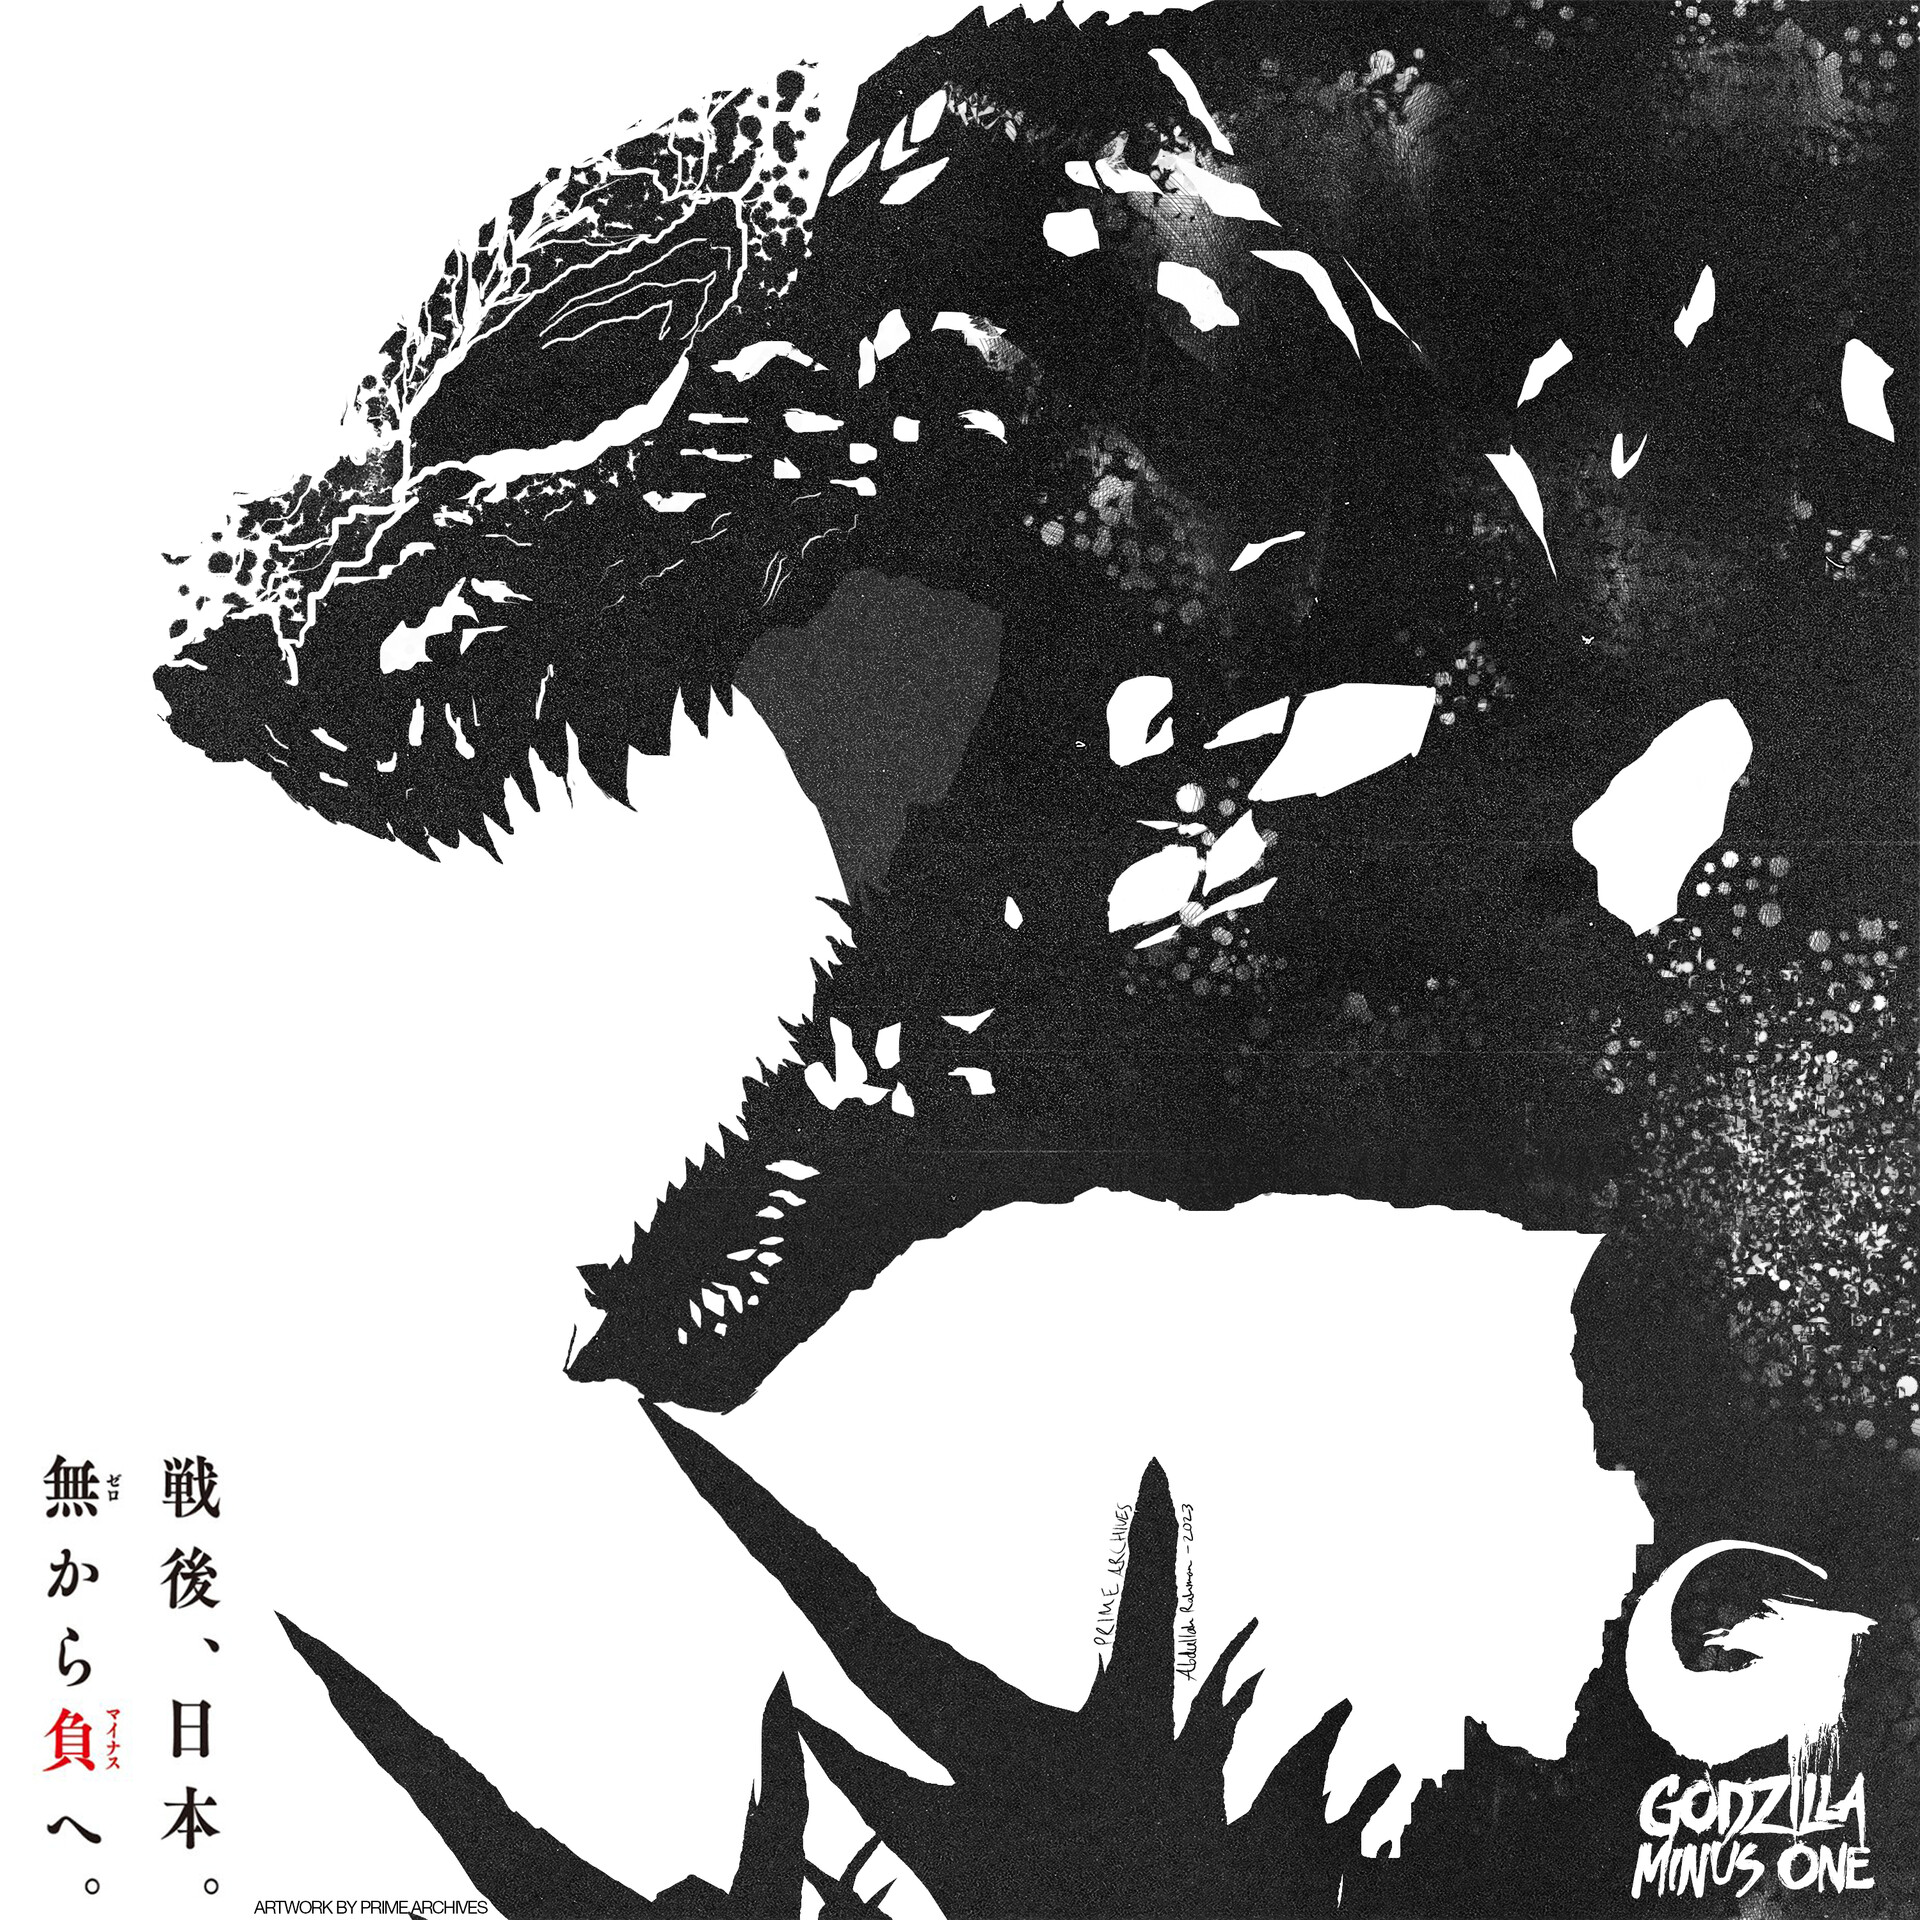 Artstation Godzilla Minus One 6516